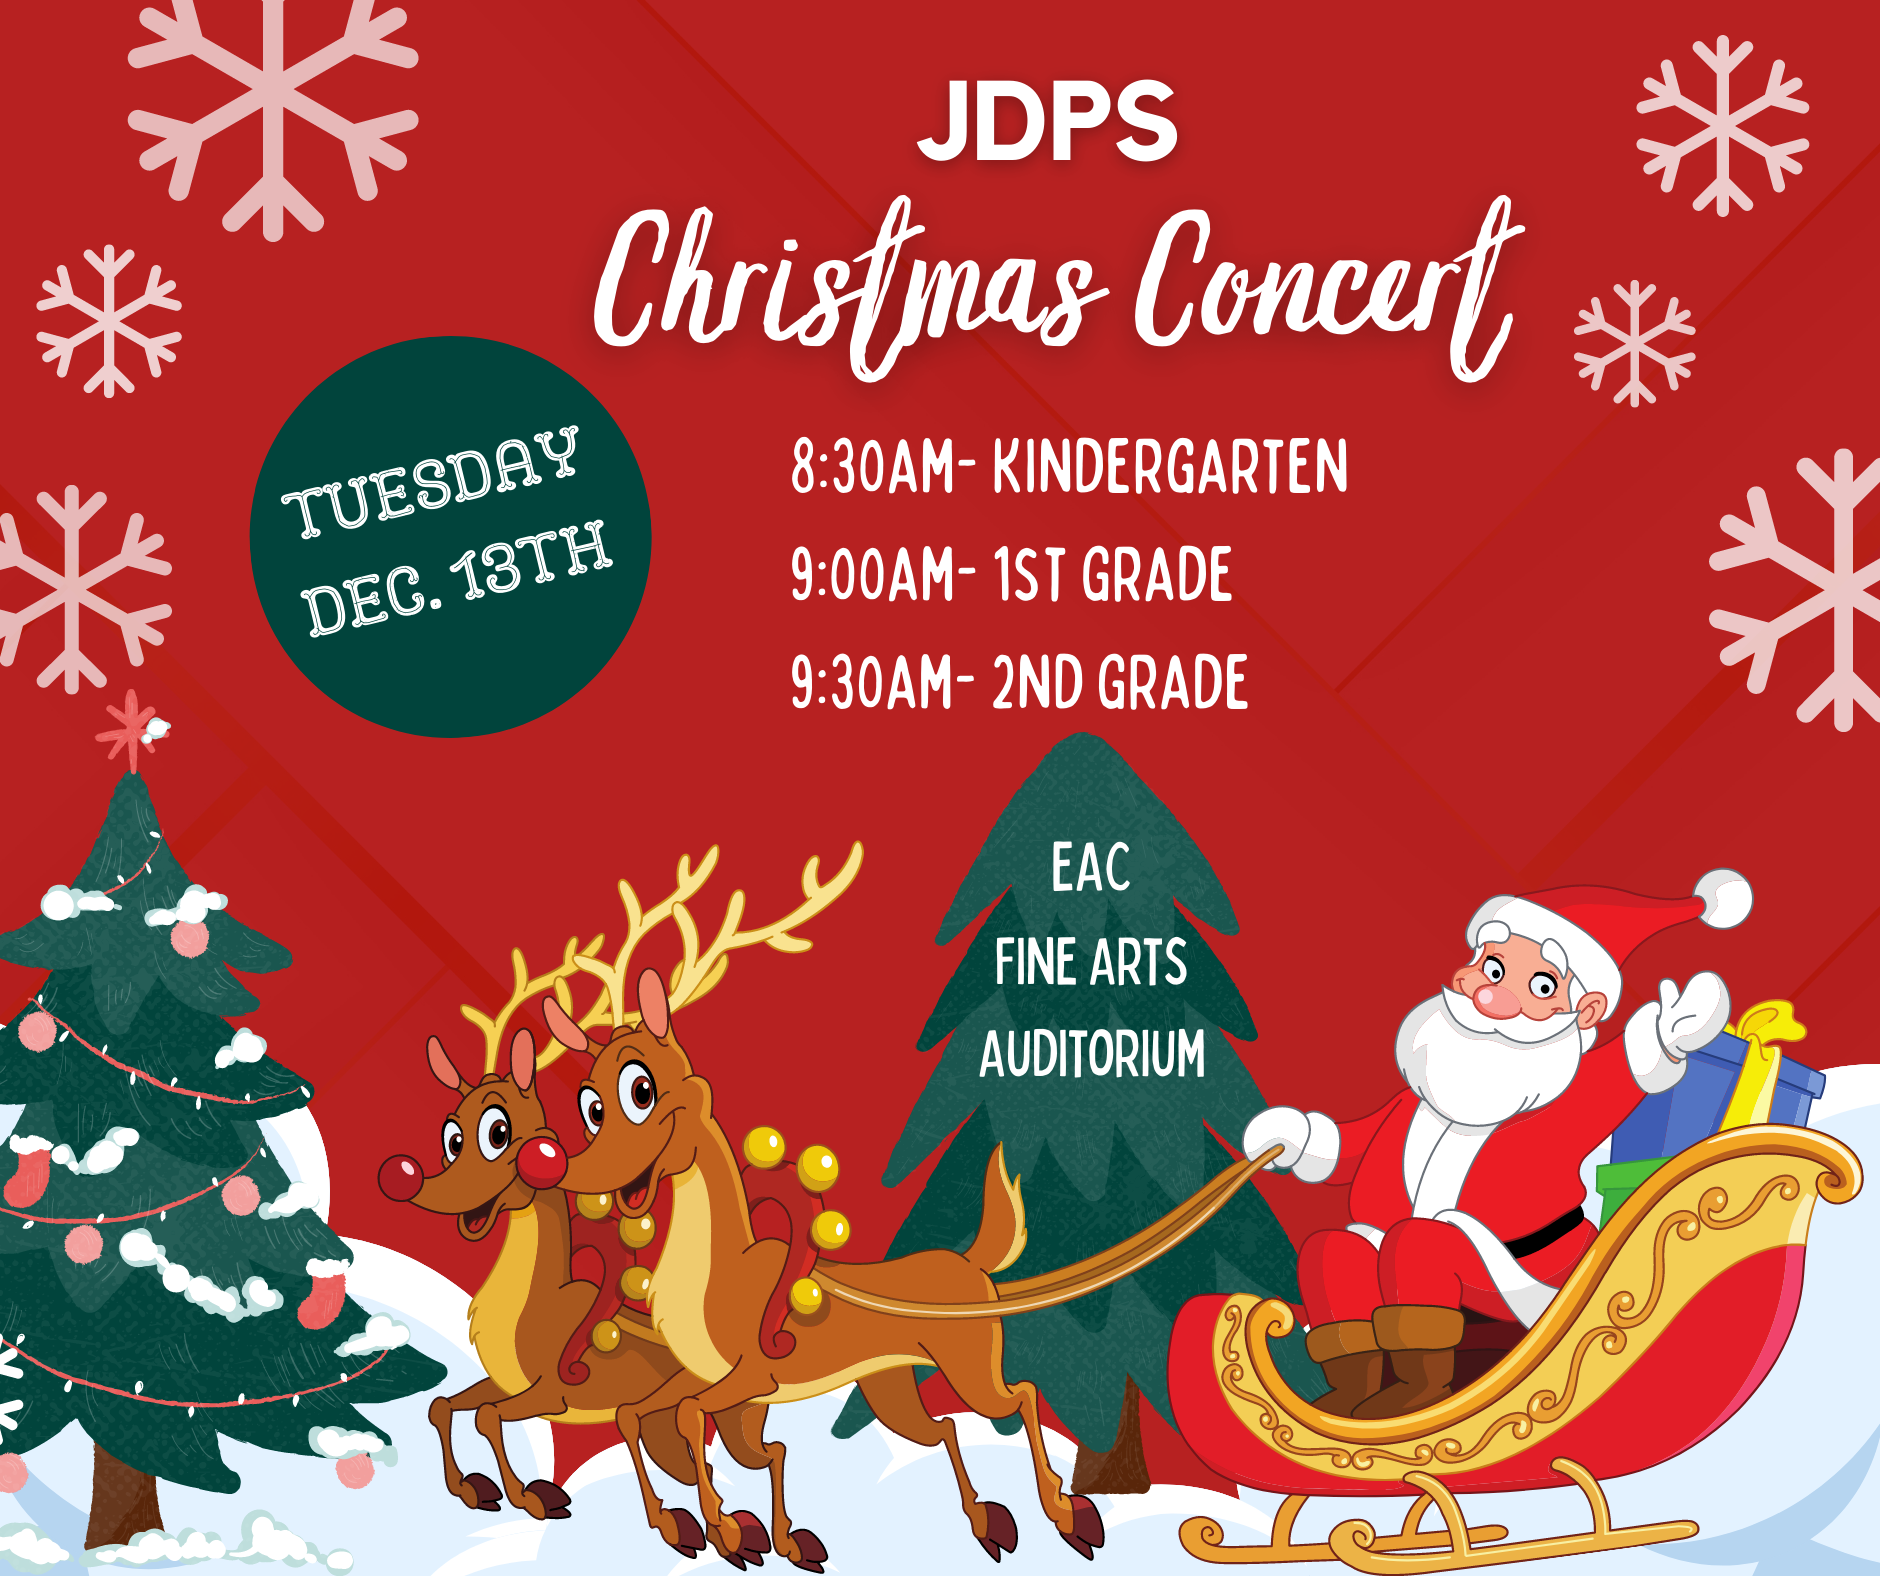 JDPS Christmas Concert